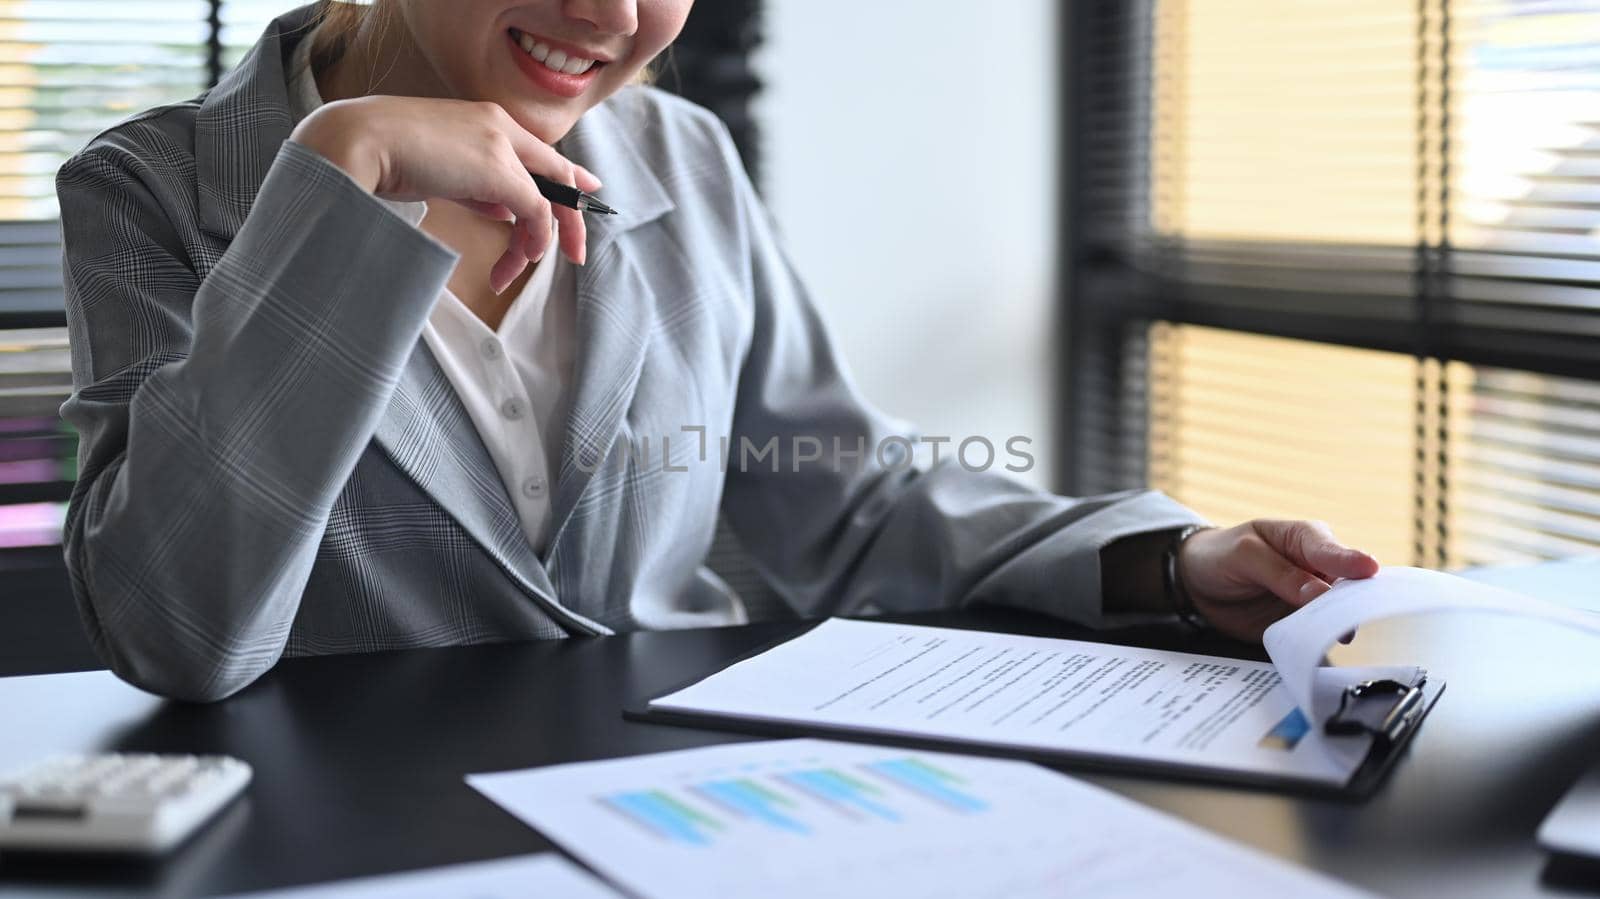 Female accountant analyzing financial document at office desk by prathanchorruangsak